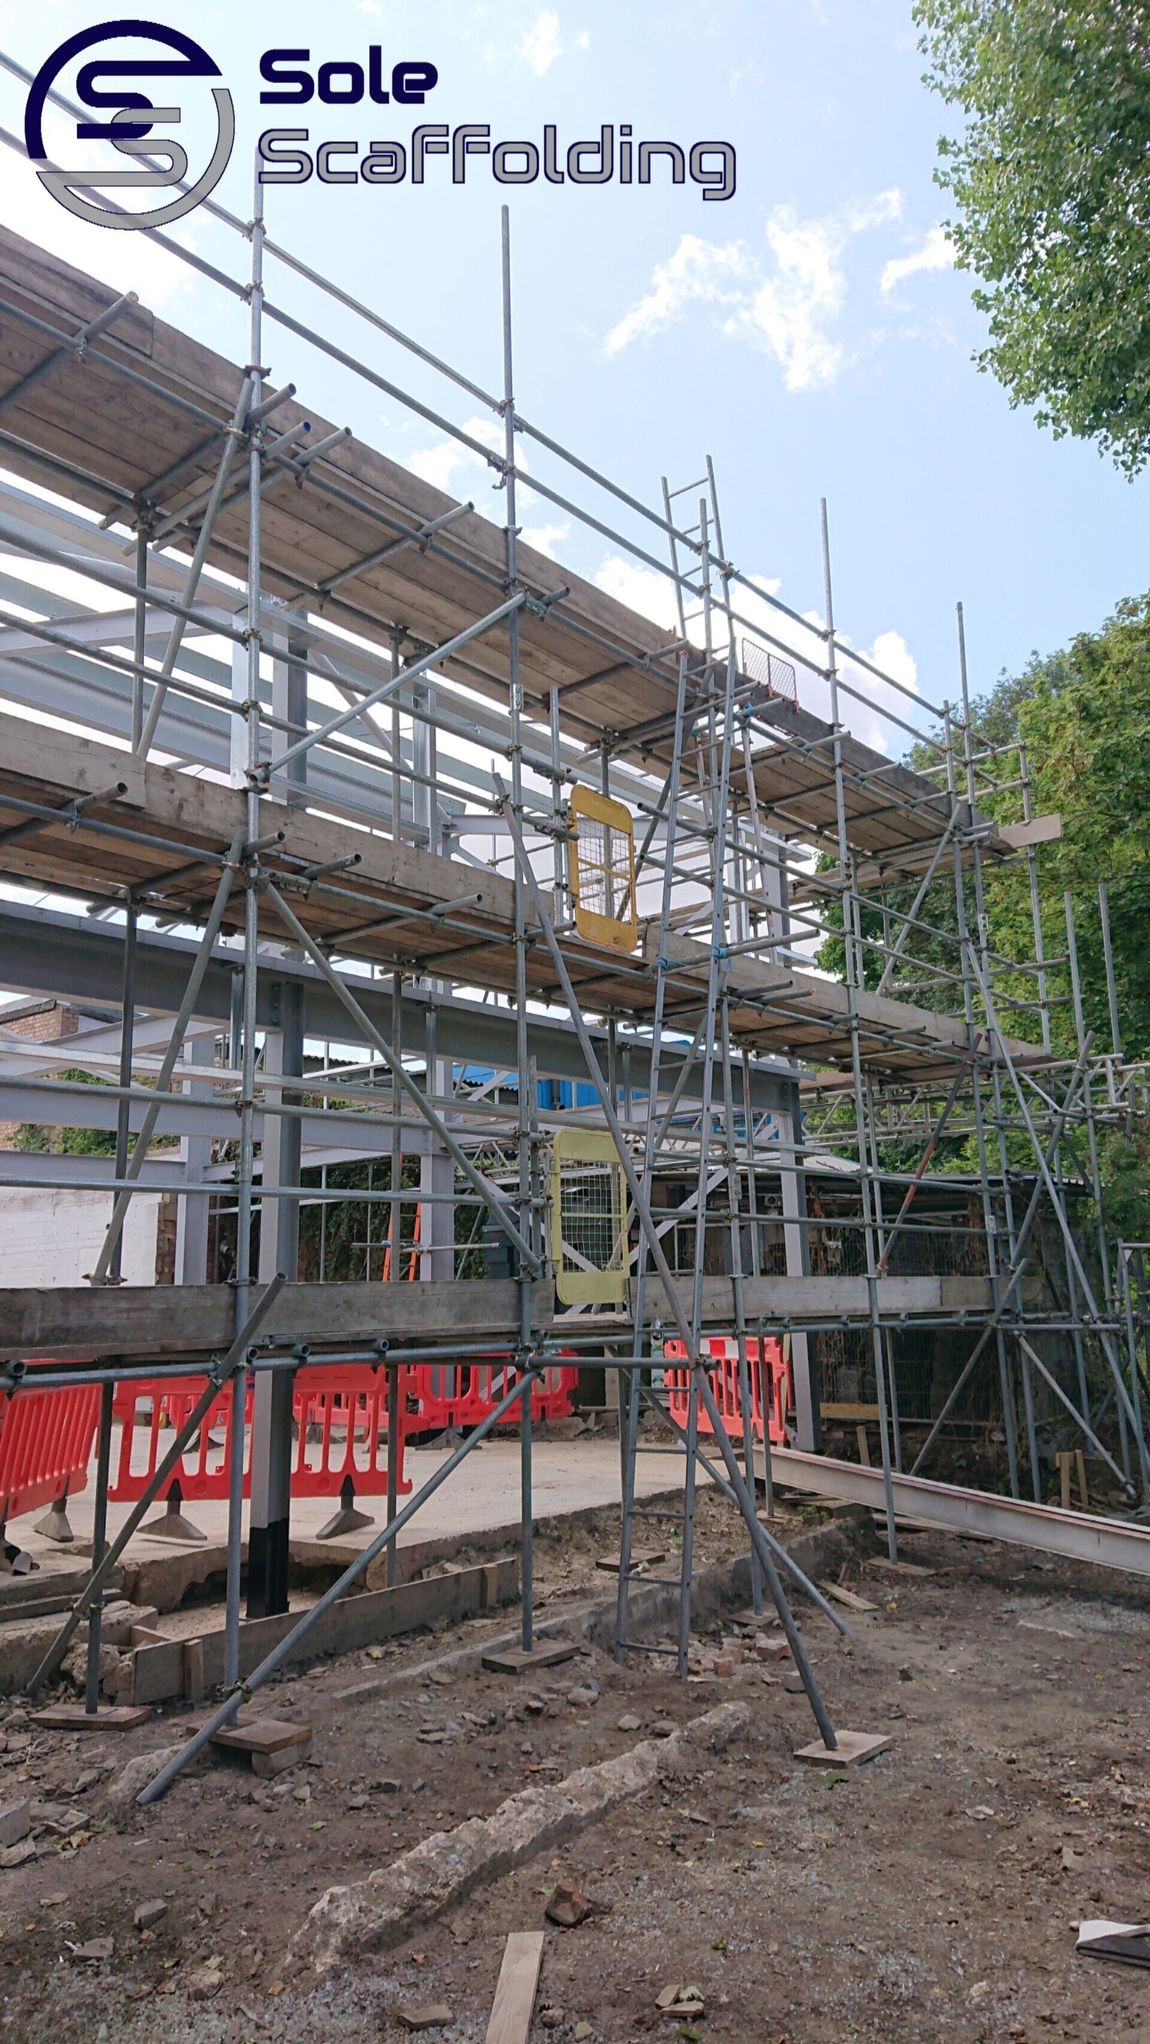 sole scaffolding - new industrial building in Cambridge